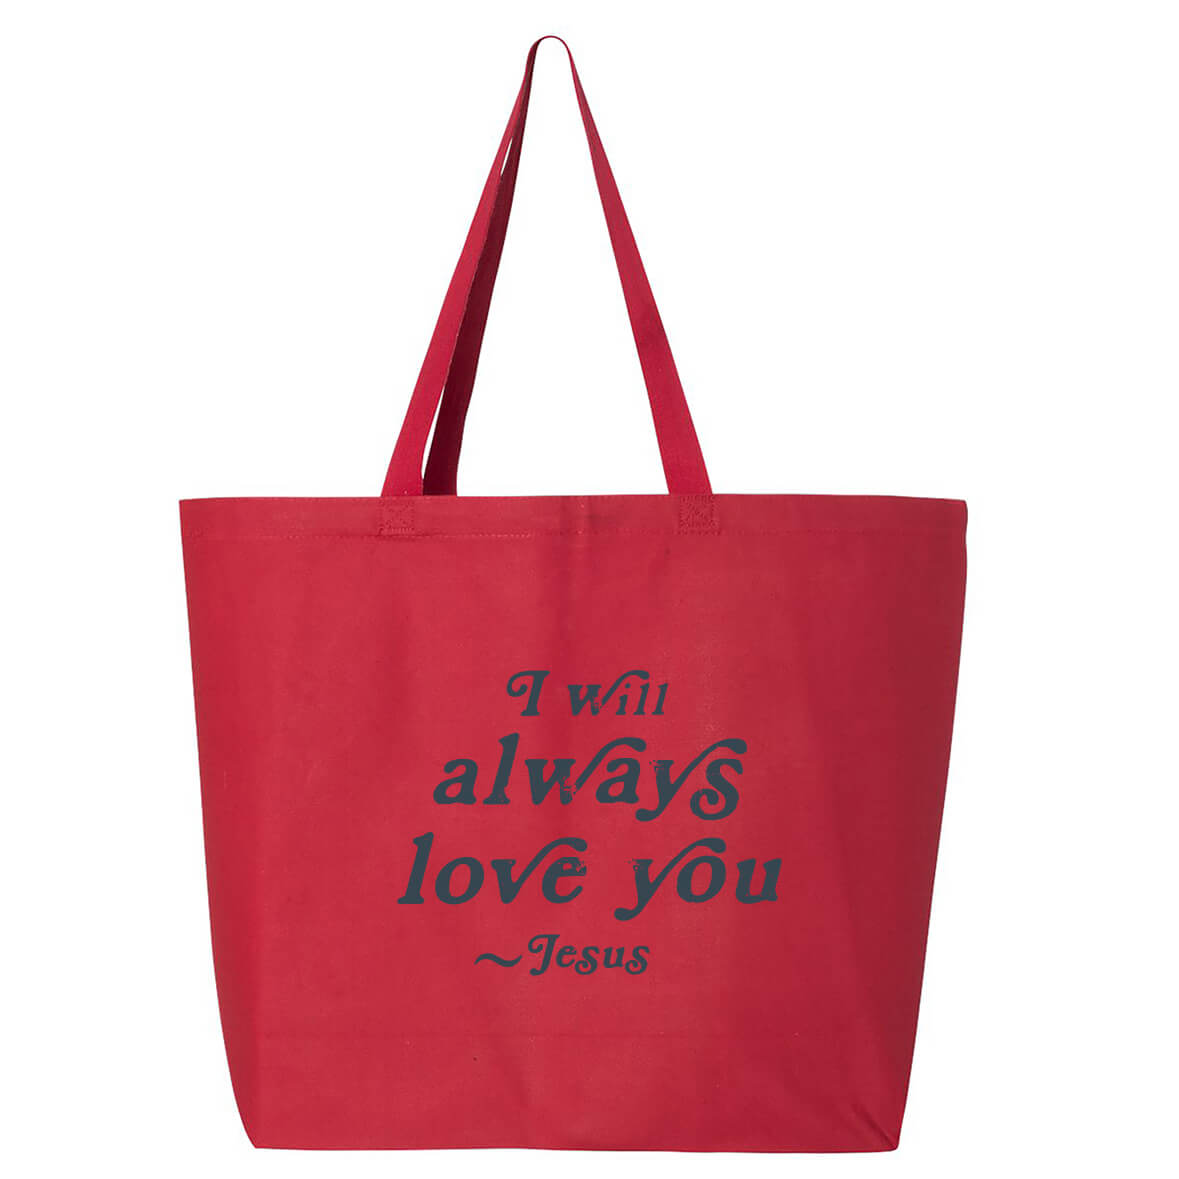 I Will Always Love You, Jesus Jumbo Tote Canvas Bag